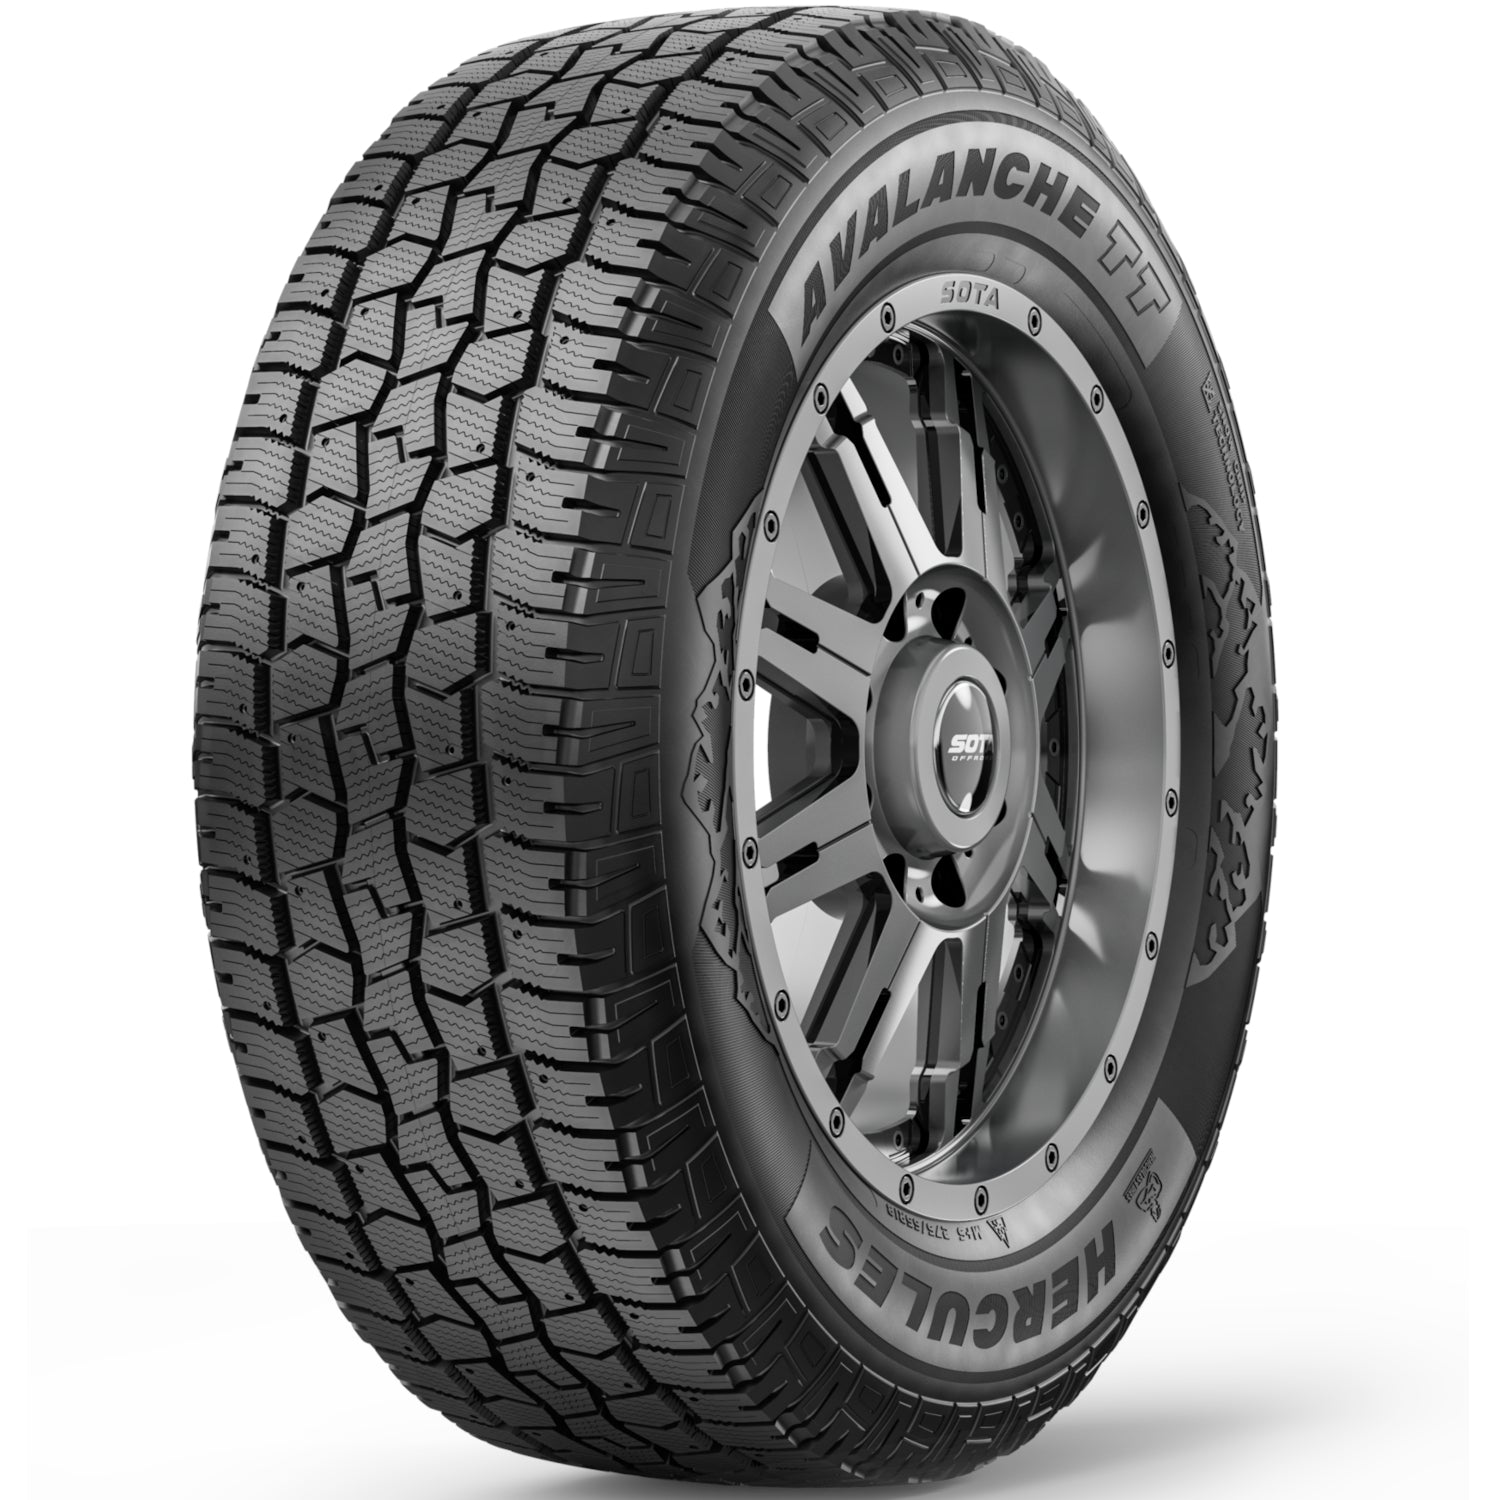 HERCULES AVALANCHE TT 265/70R17 (31.6X10.4R 17) Tires